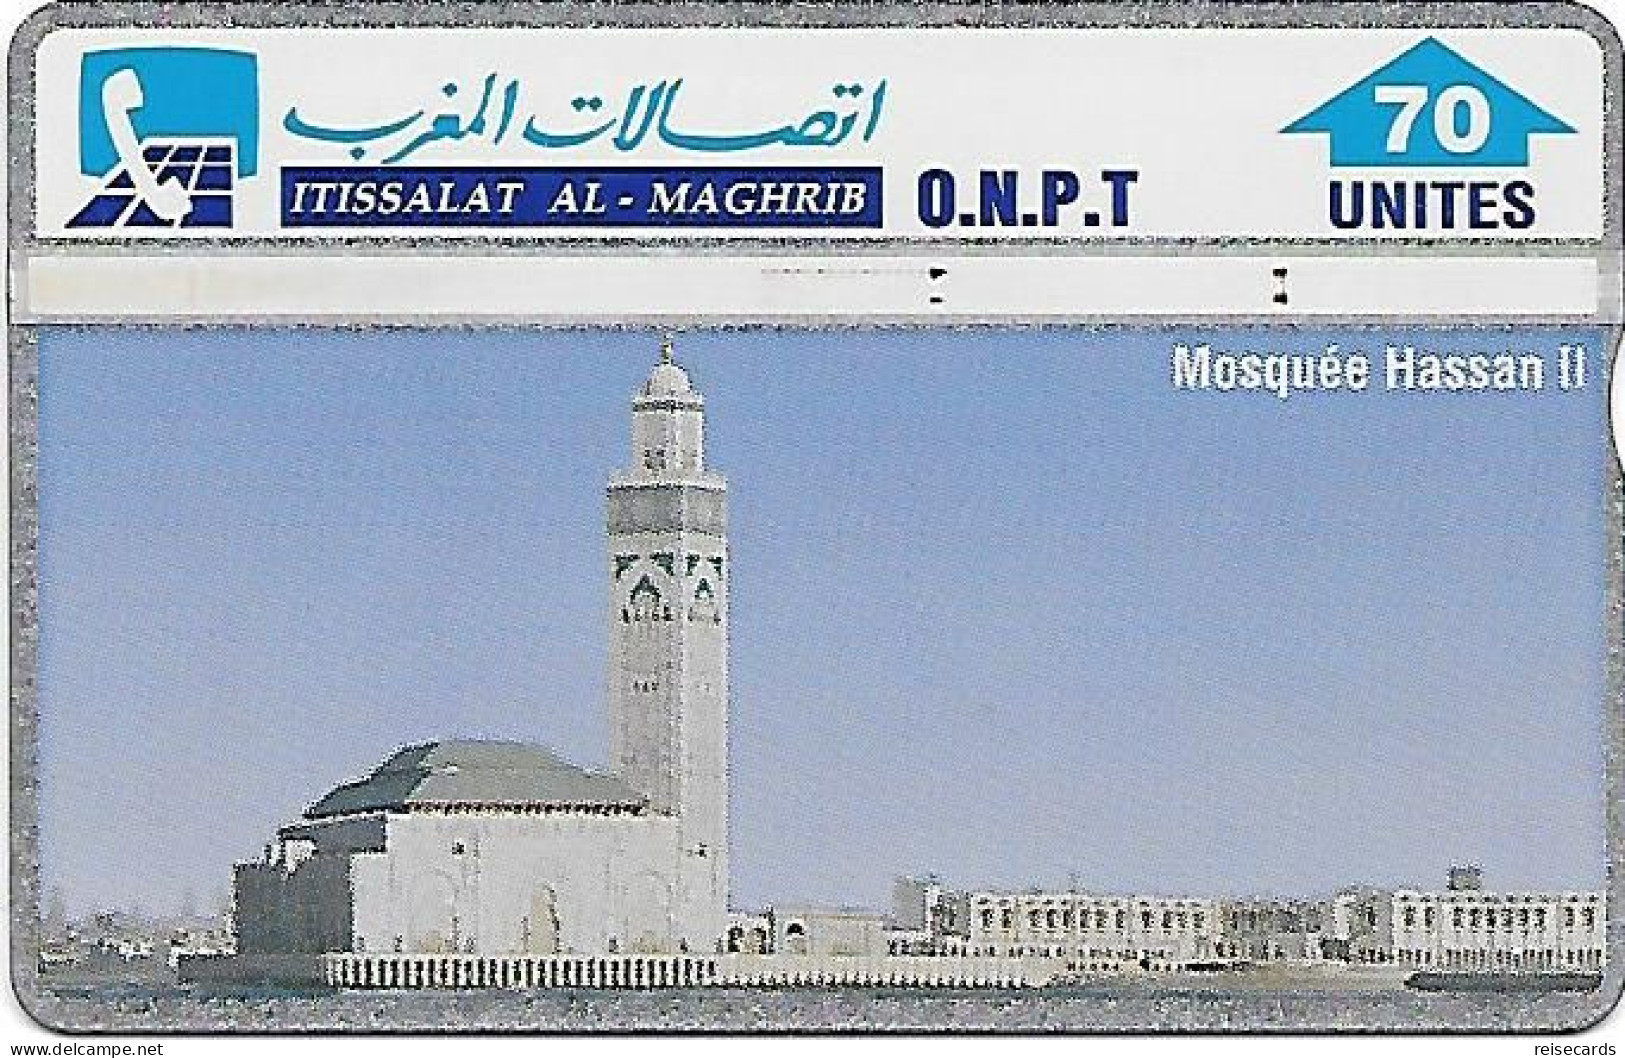 Morocco: Itissalat Al-Maghrib - 401F Mosquée Hassan II, Casablanca - Morocco